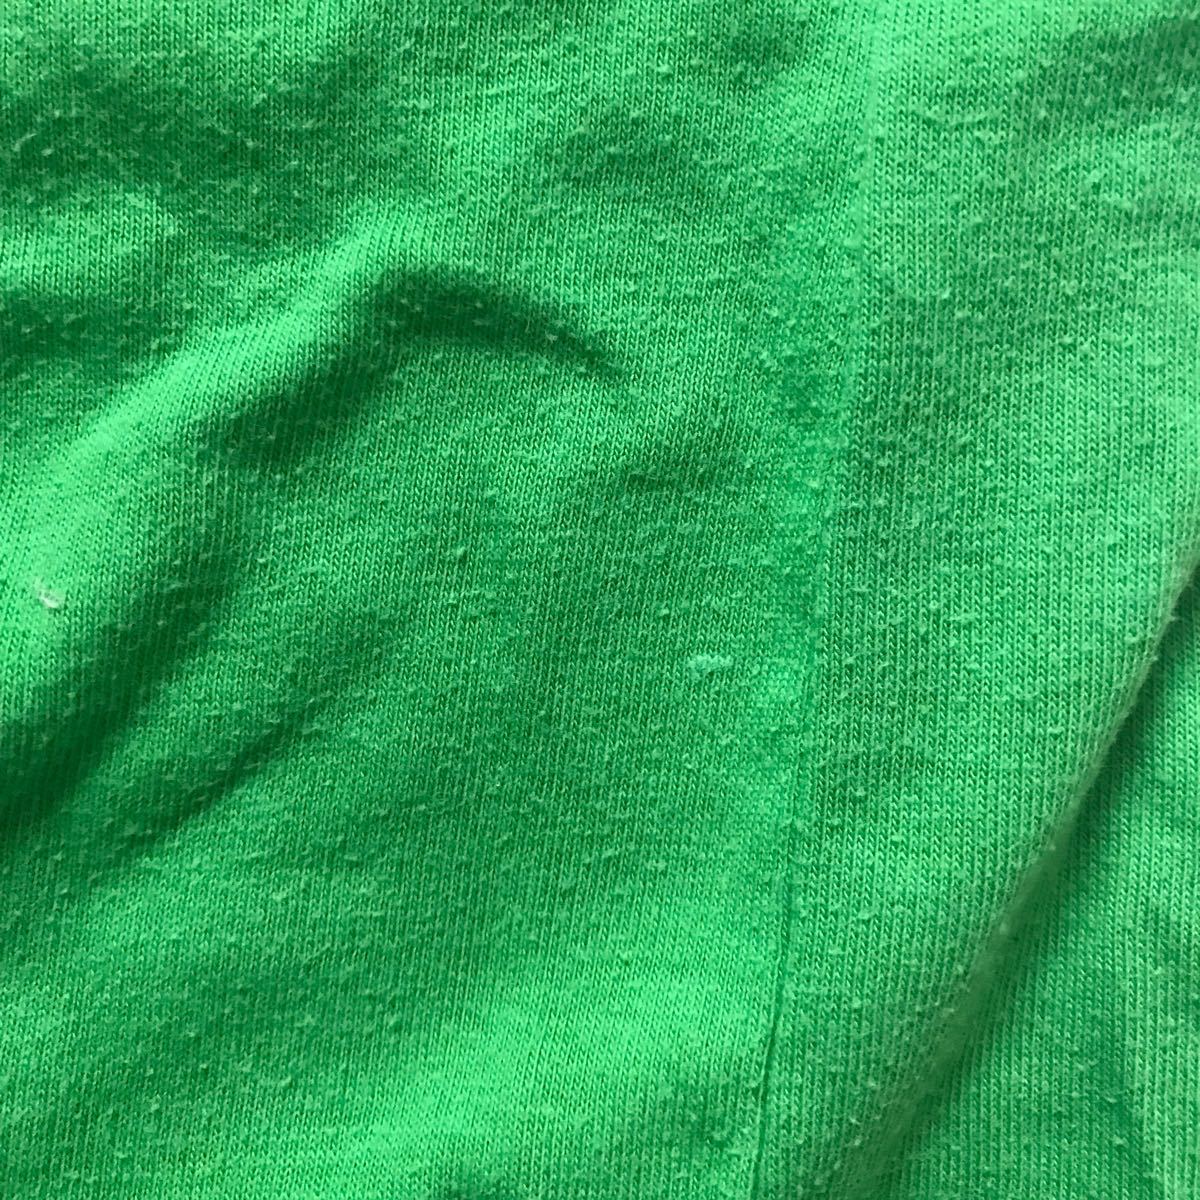 GERRY cosby ジュニア 半袖 Tシャツ シャツ グリーン 緑 ラグラン袖 子供 キッズ 男子 男児 ボーイズ コスビー